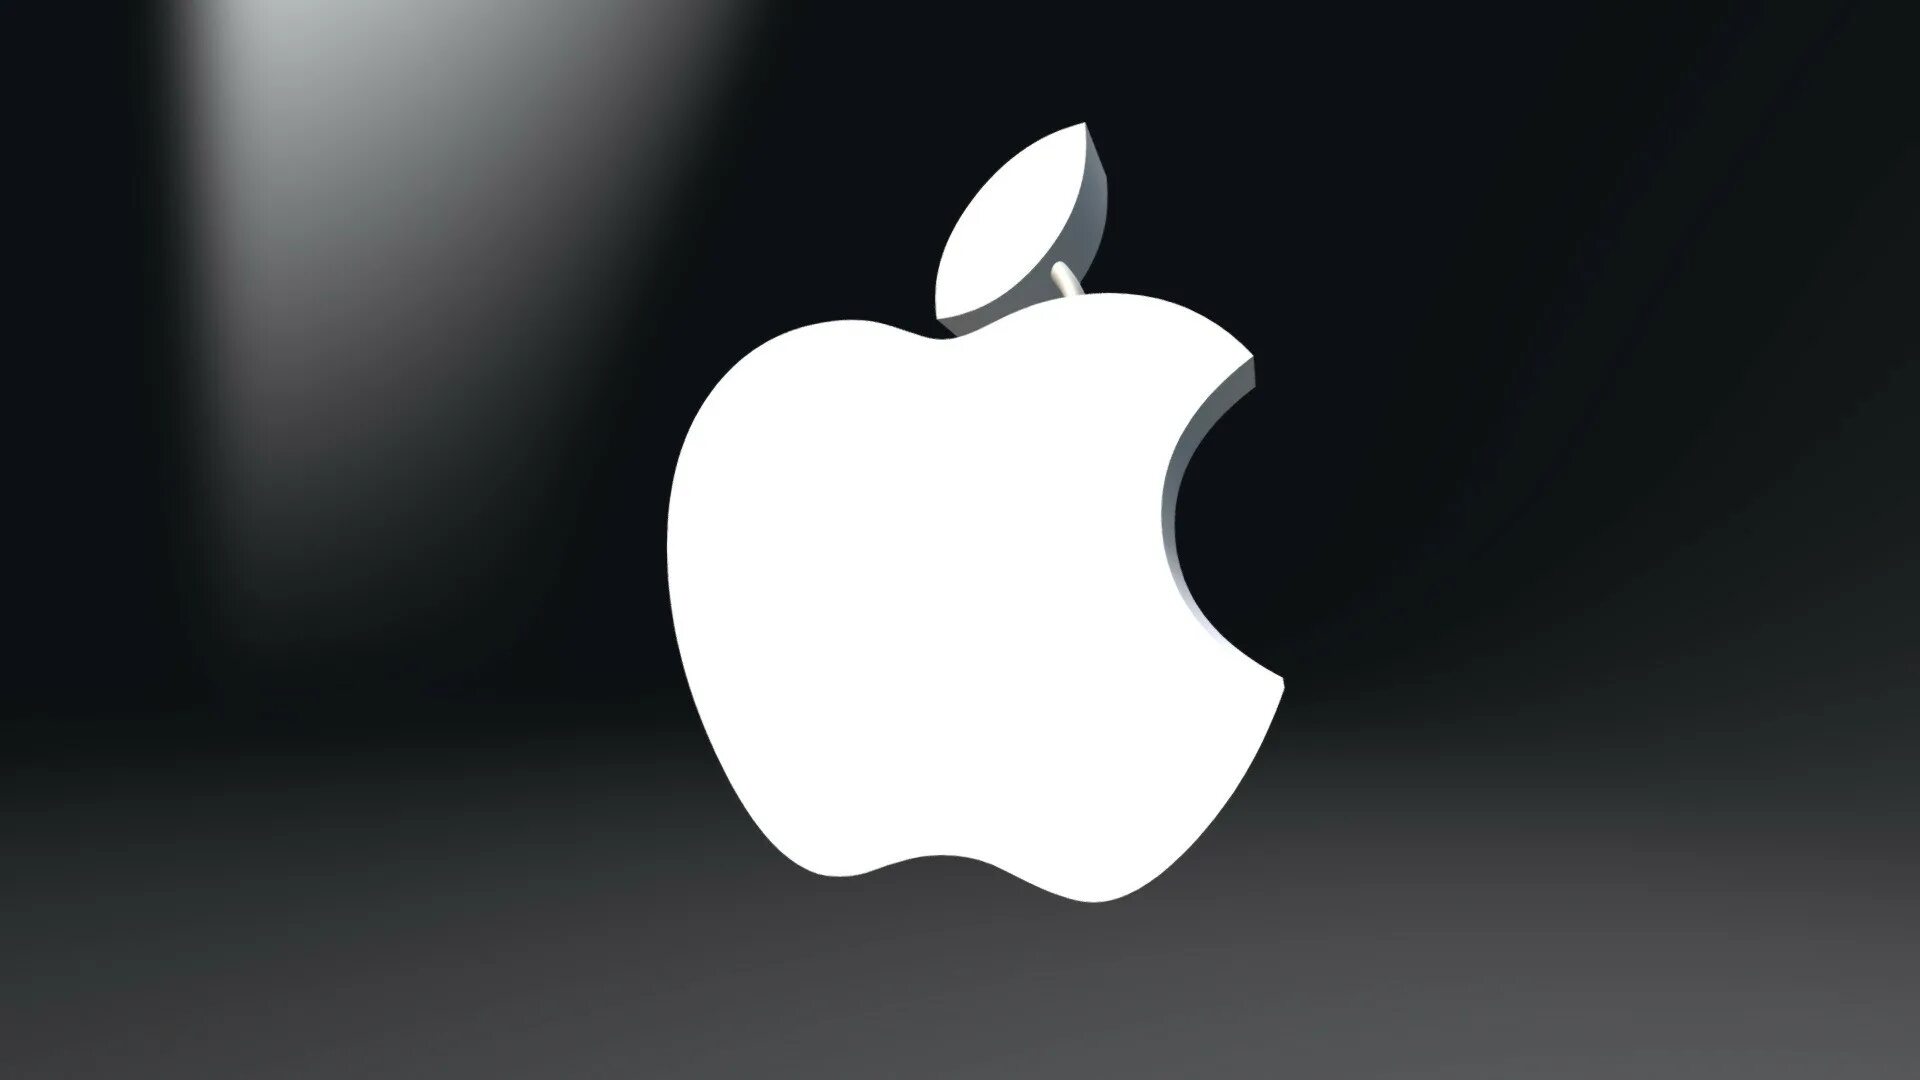 Товарный знак Эппл яблоко. Айфон Аппле логотип. Эпл лого 2021. АПЛ айфон фирма. Телефон айфон яблоко